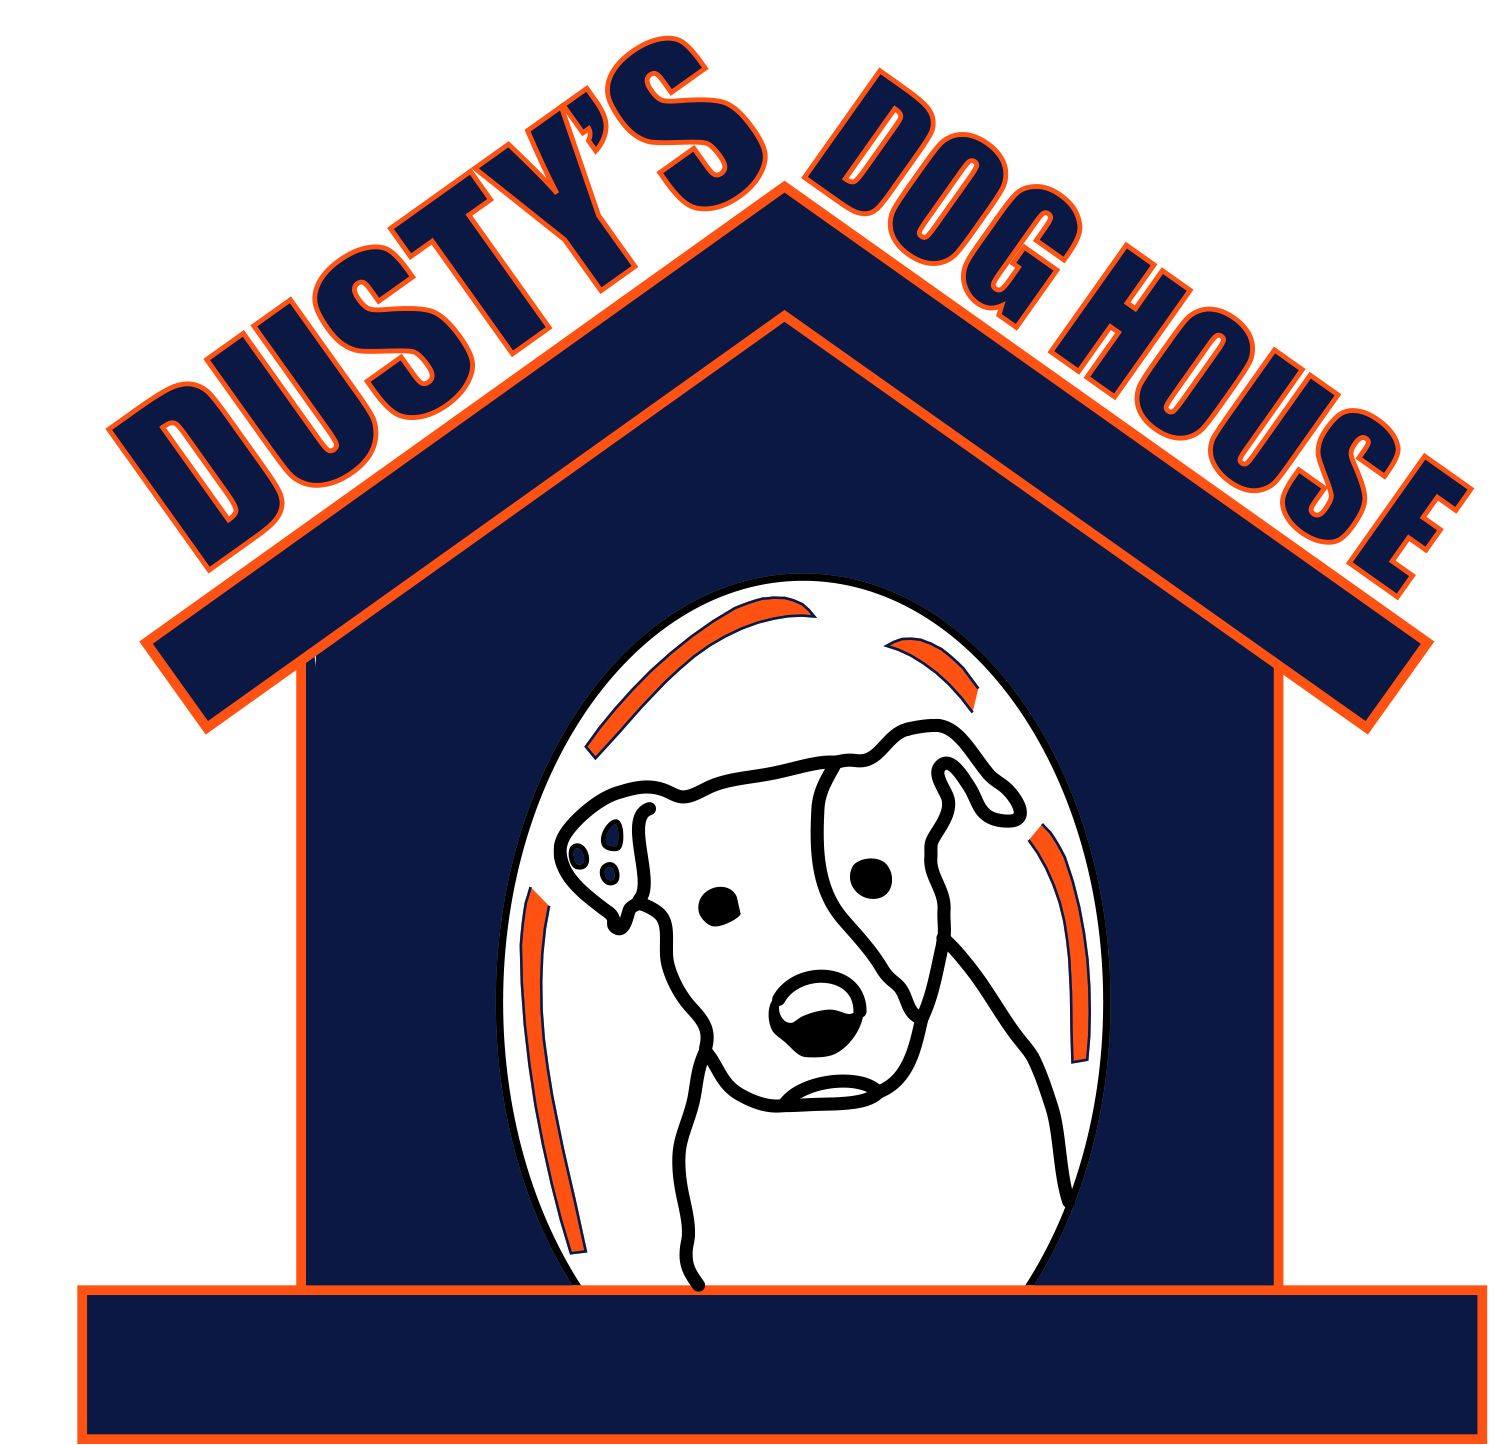 Демо версия дог хаус dog houses info